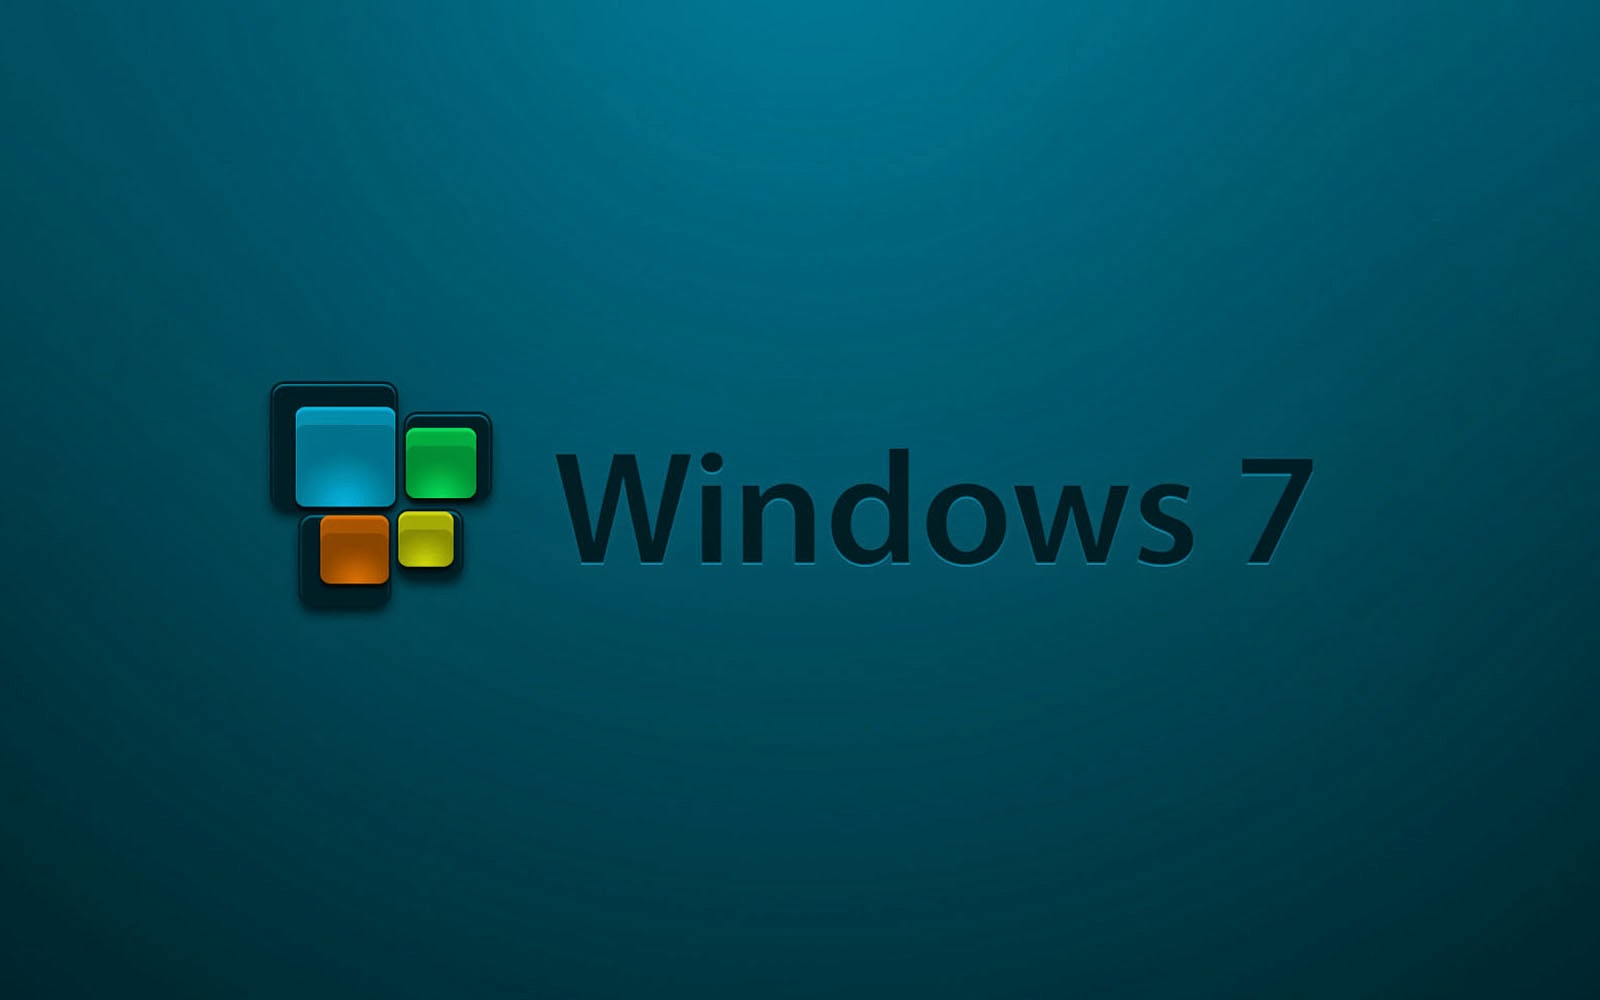 Tag Windows Desktop Wallpaper Background Photos Image And